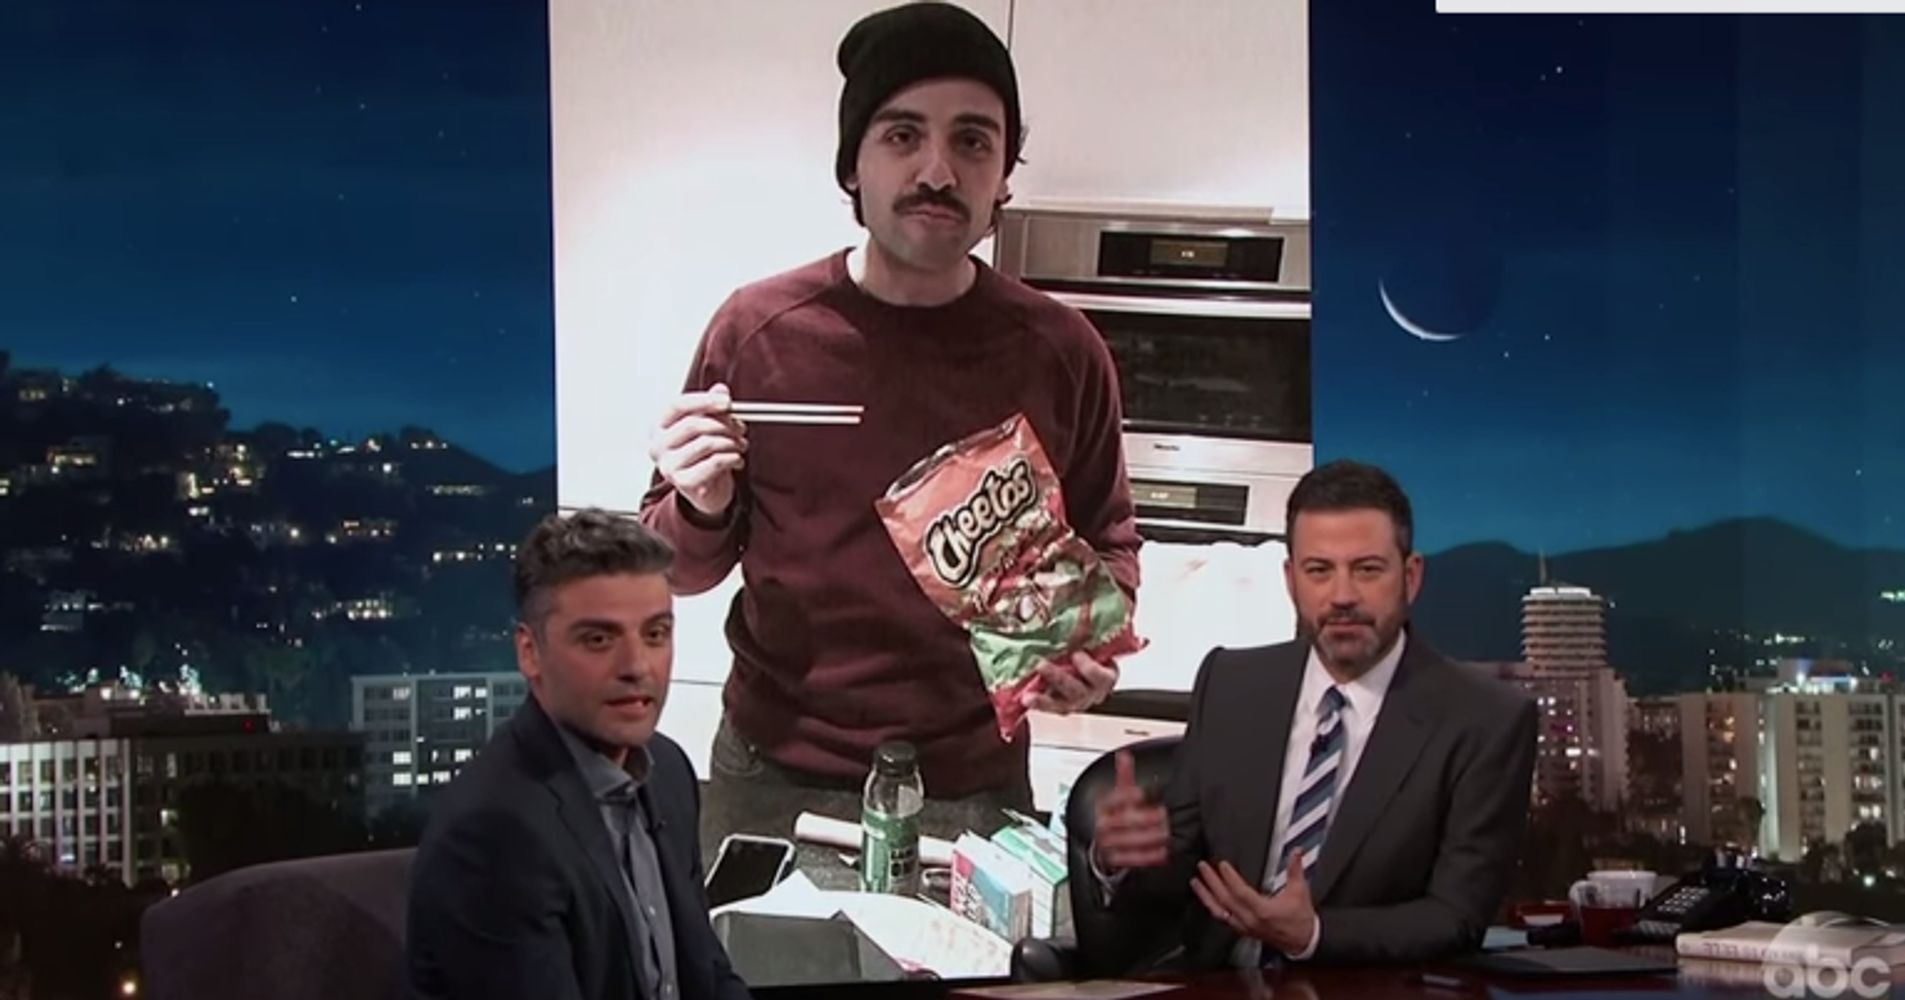 Oscar Isaac Explains Viral Photo Of Him Eating Cheetos With Chopsticks